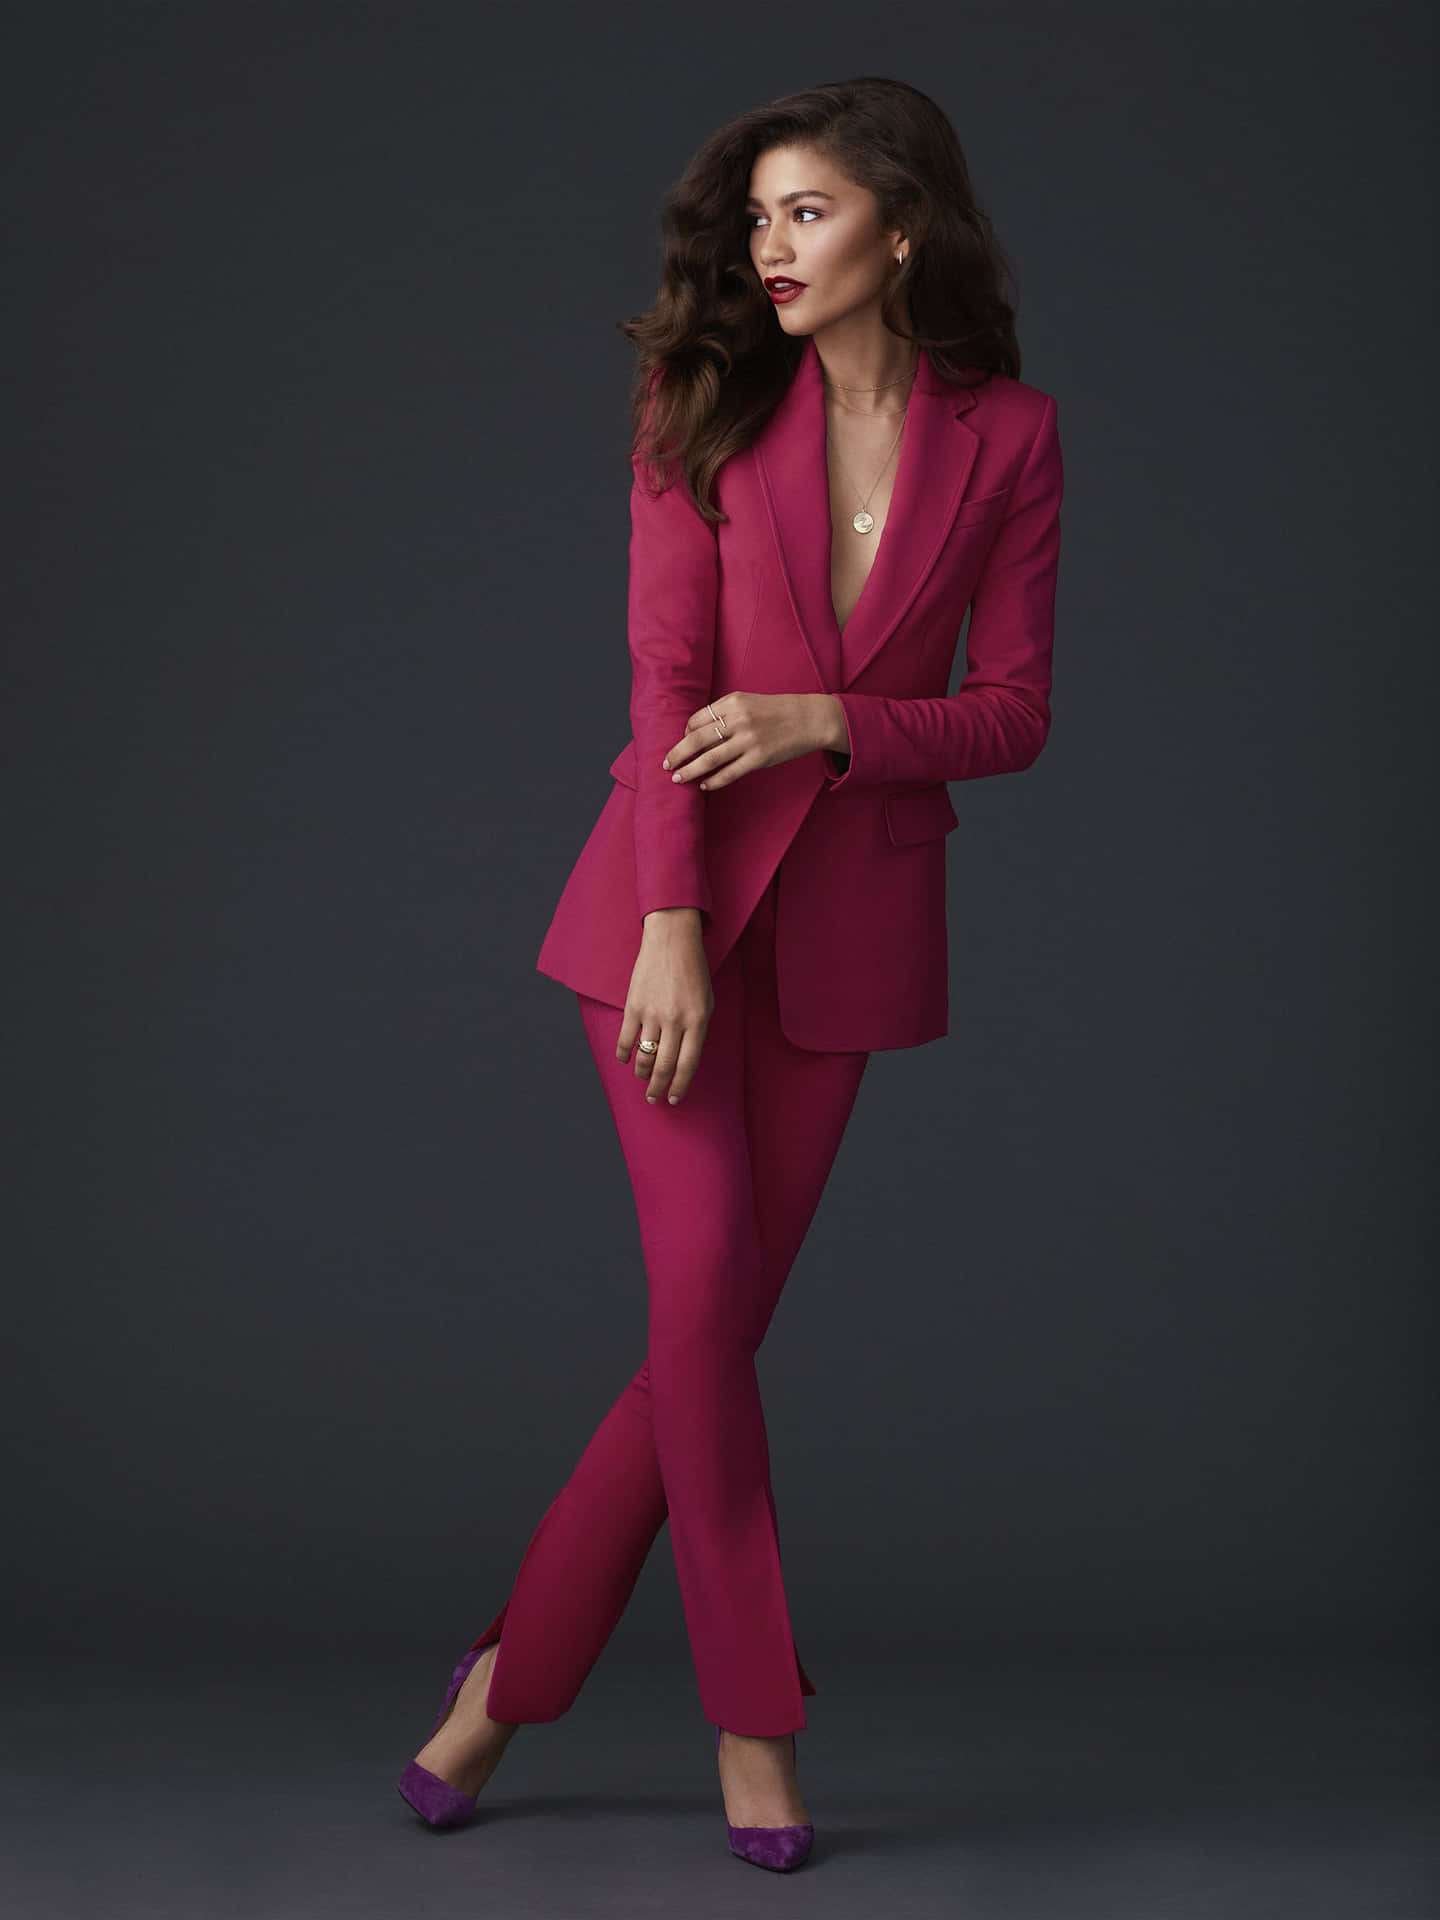 Zendaya Pink Suit HD Wallpaper